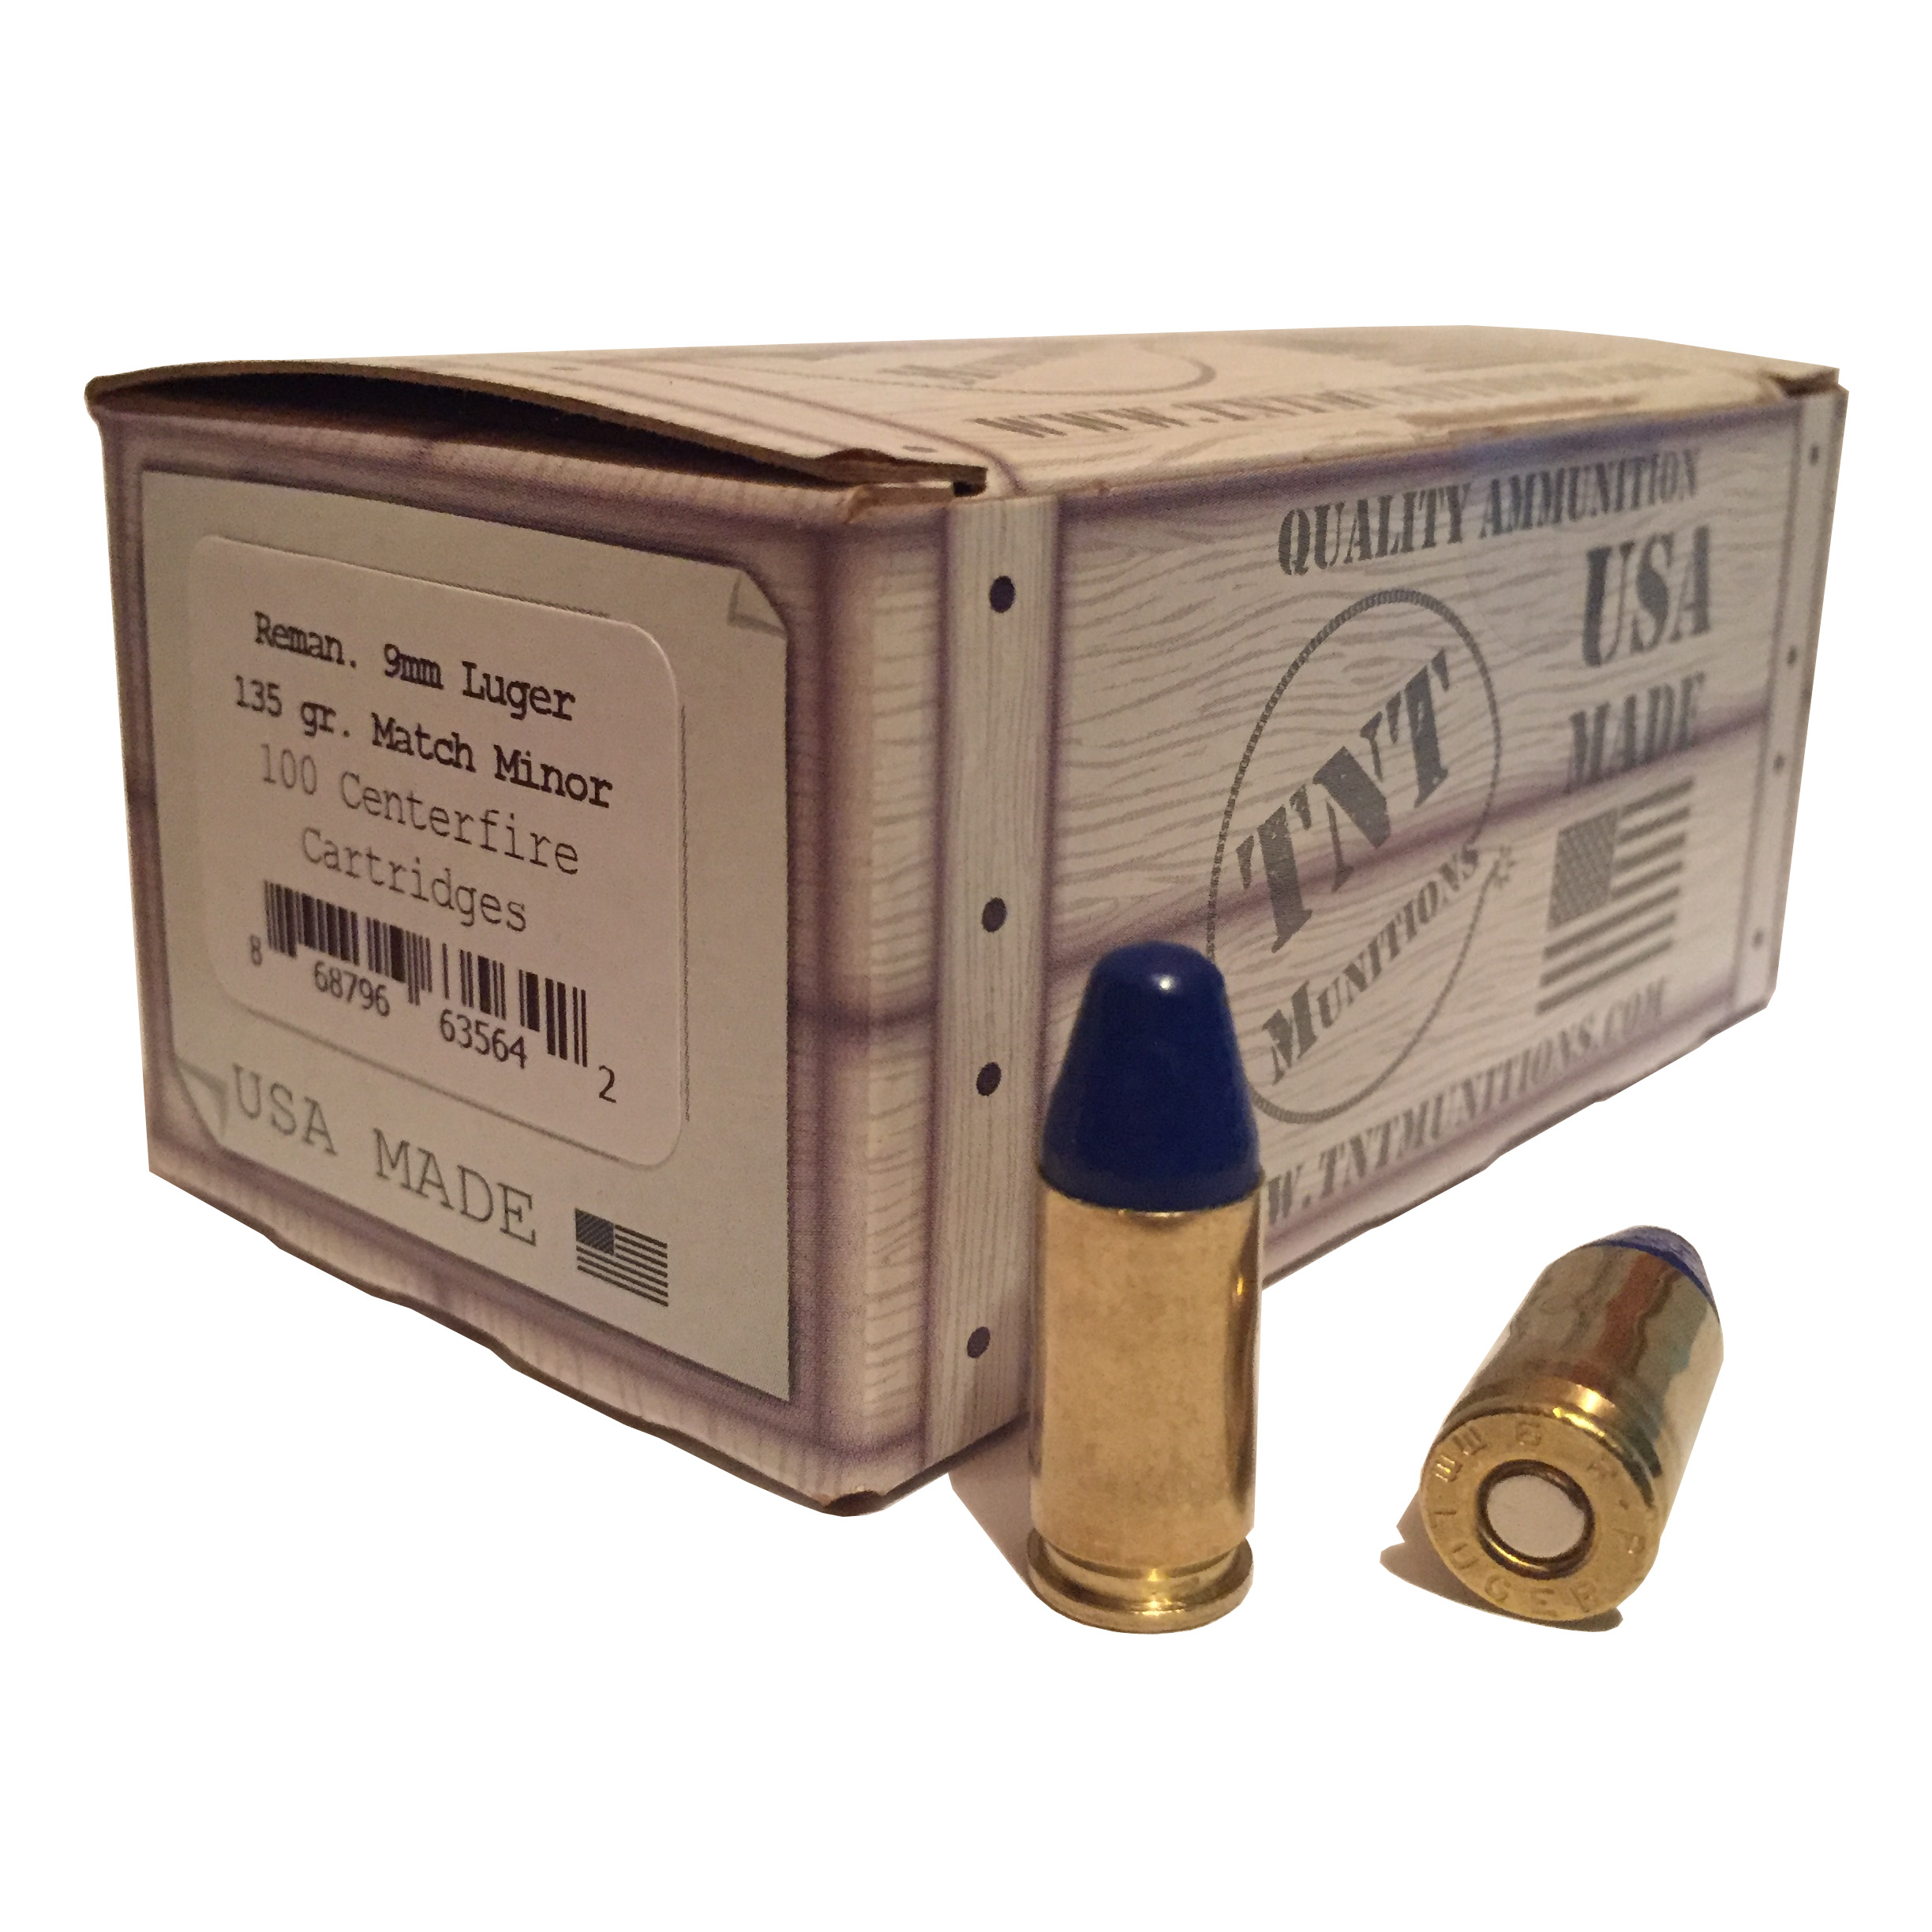 9mm Luger 135 gr. TC Match Minor - SHIPS NBD